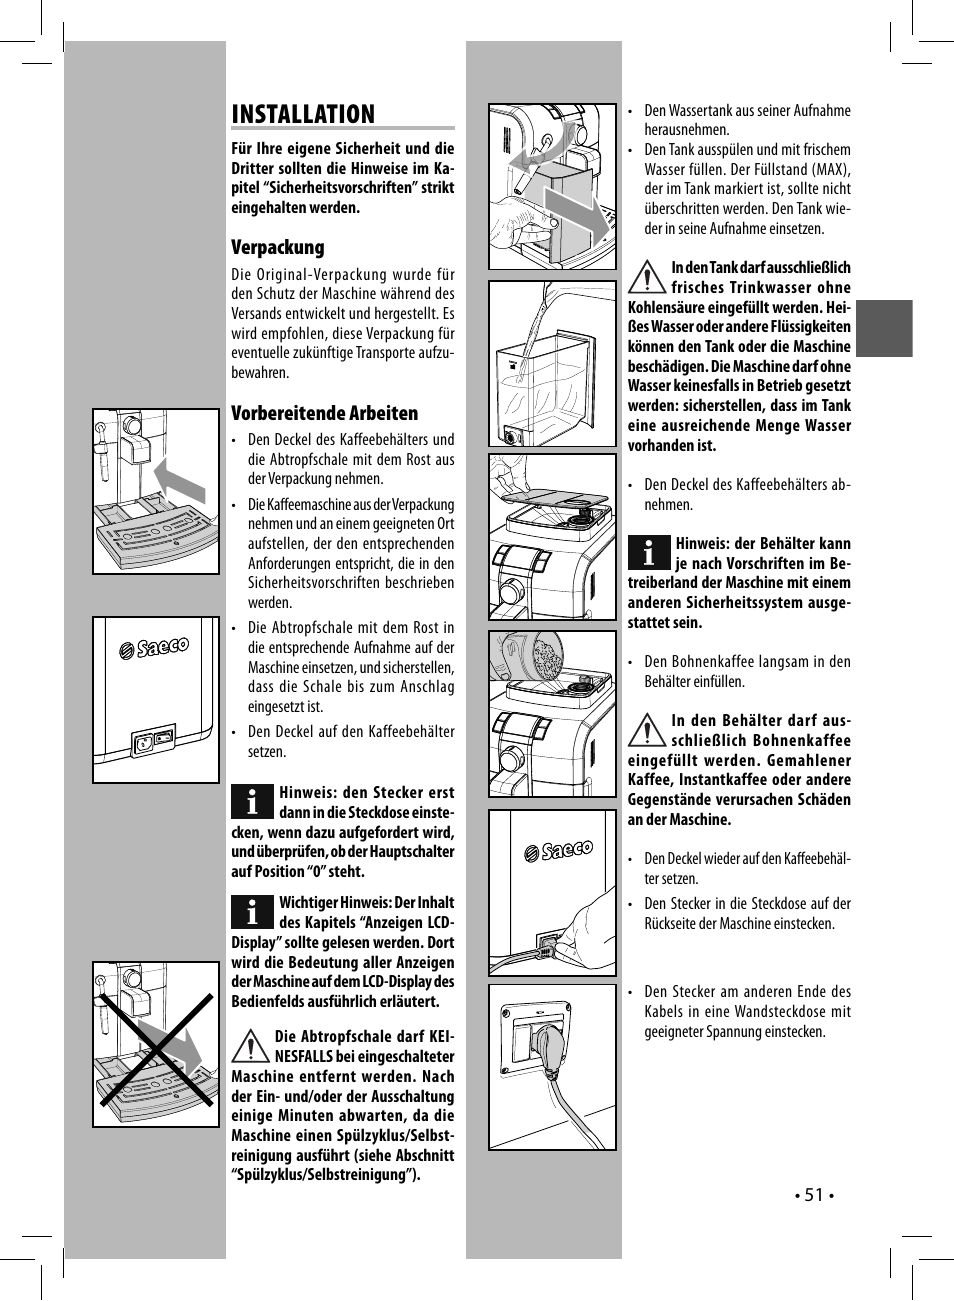 Installation, Verpackung, Vorbereitende arbeiten | Philips Saeco Syntia  Kaffeevollautomat User Manual | Page 51 / 96 | Original mode